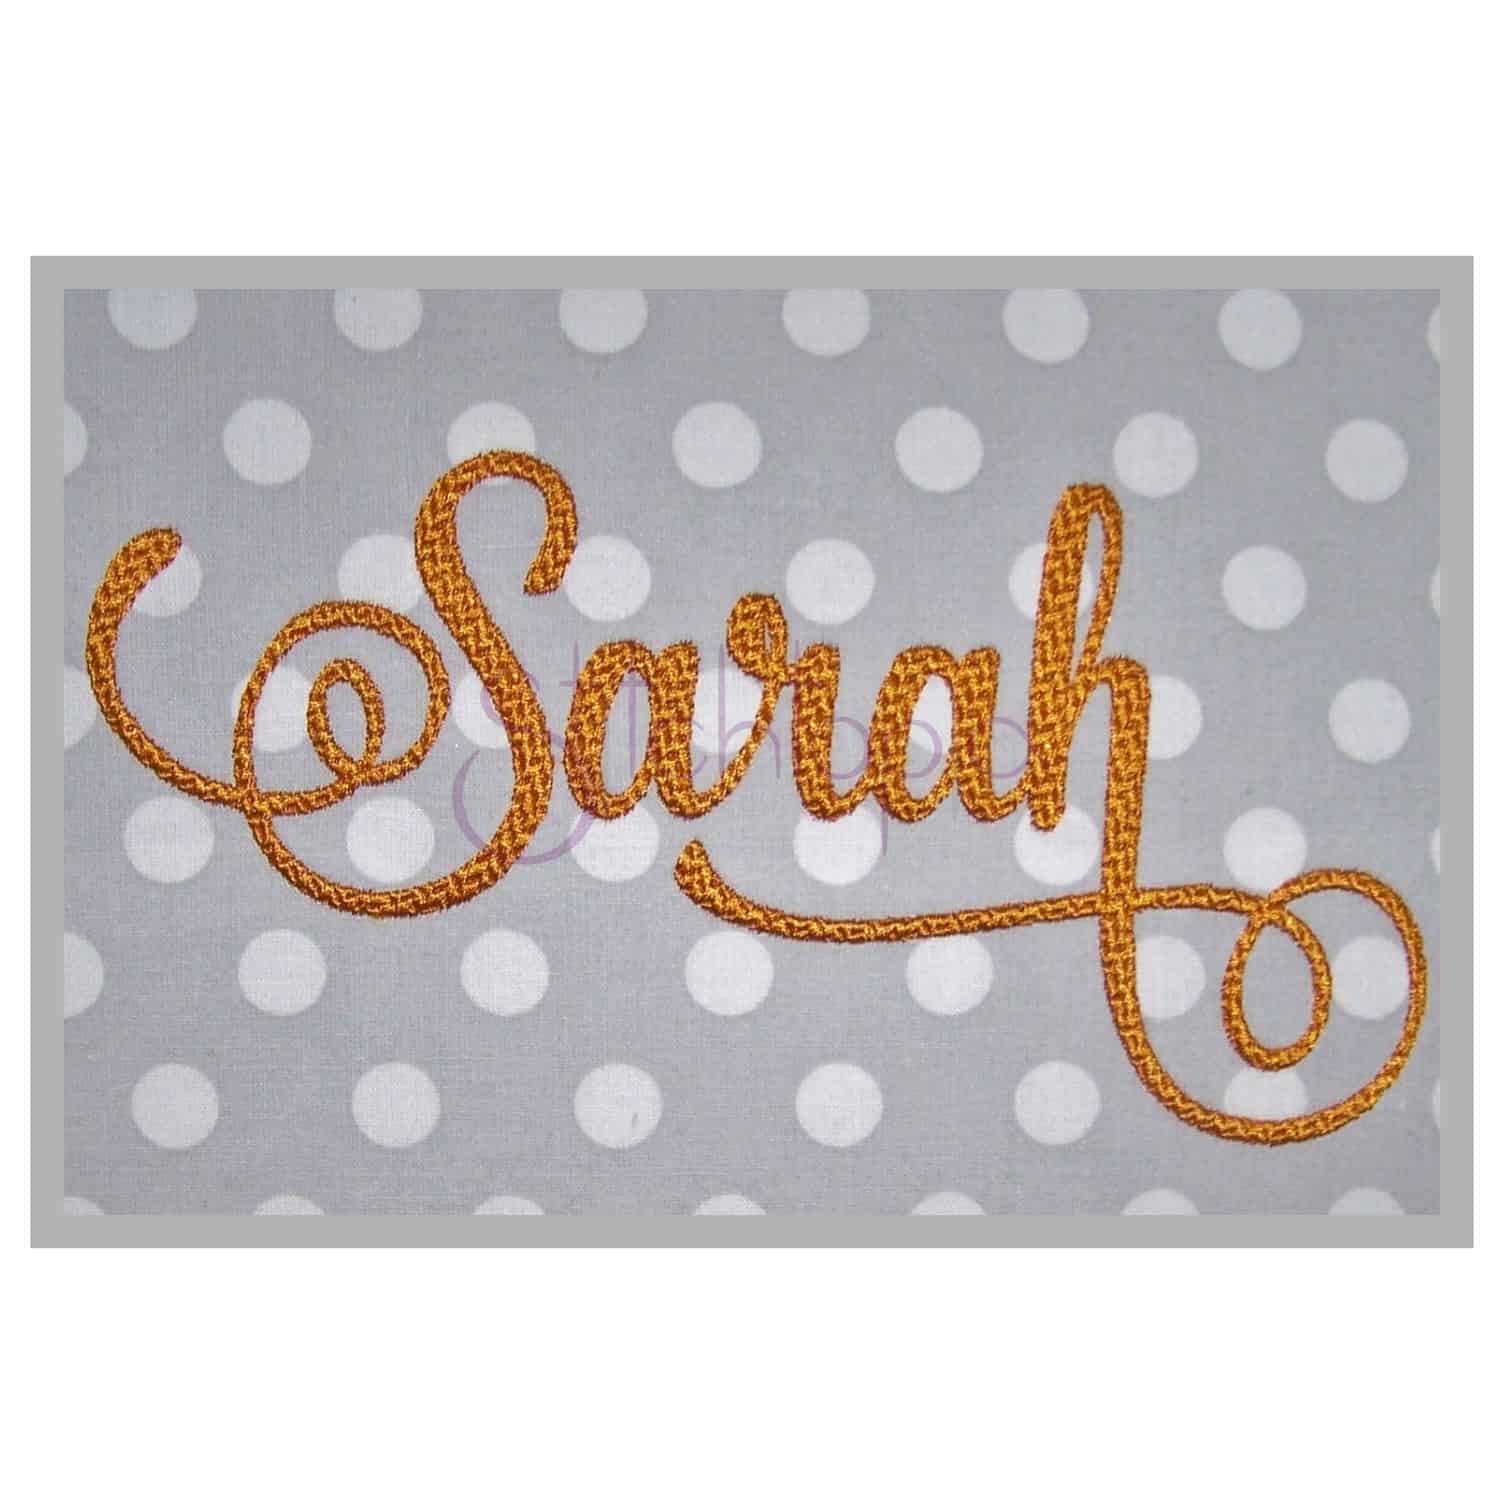 sarah 2 embroidery font